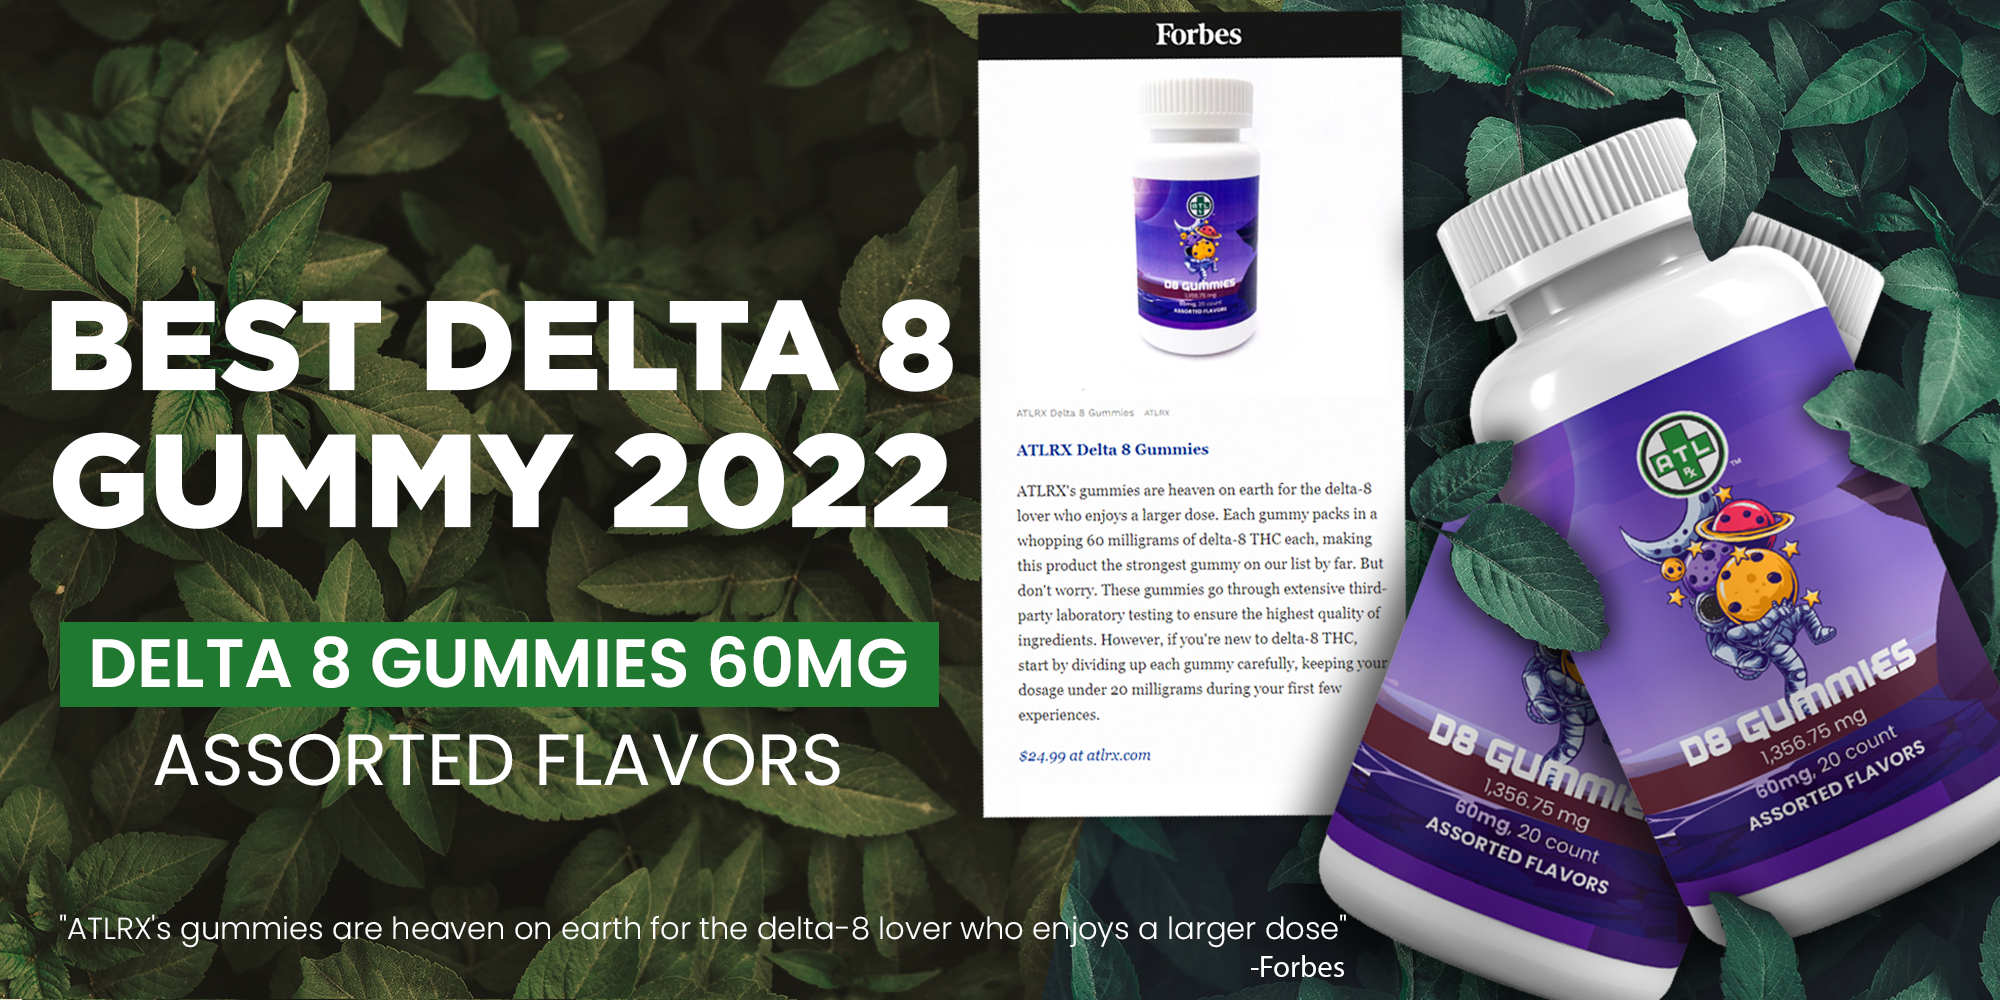 Best Delta 8 Gummy Brand 2022 From Forbes